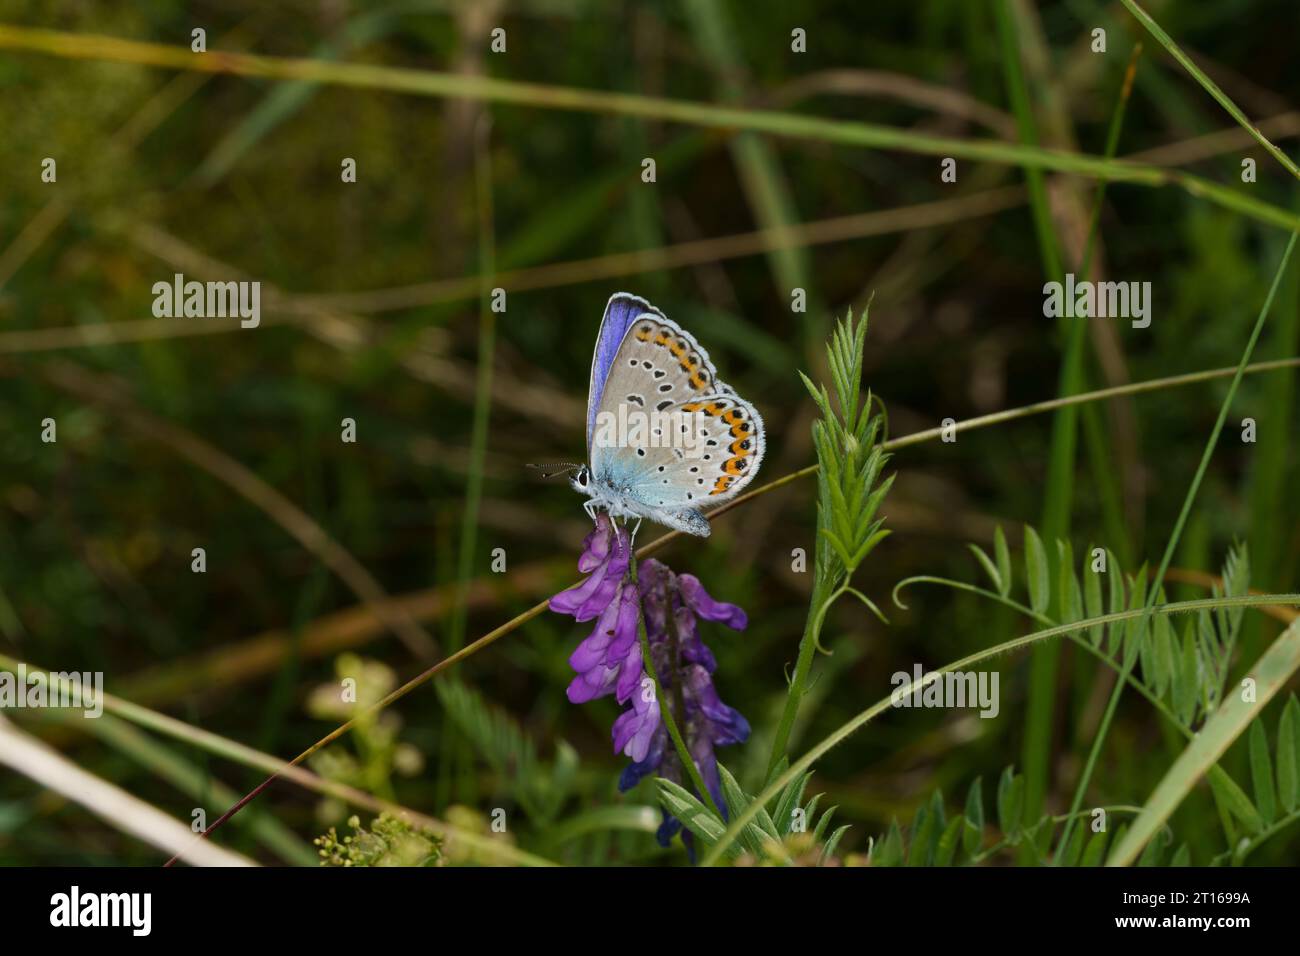 Plebeius argyrognomon Family Lycaenidae Genus Plebejus Reverdin's blue butterfly wild nature insect photography, picture, wallpaper Stock Photo